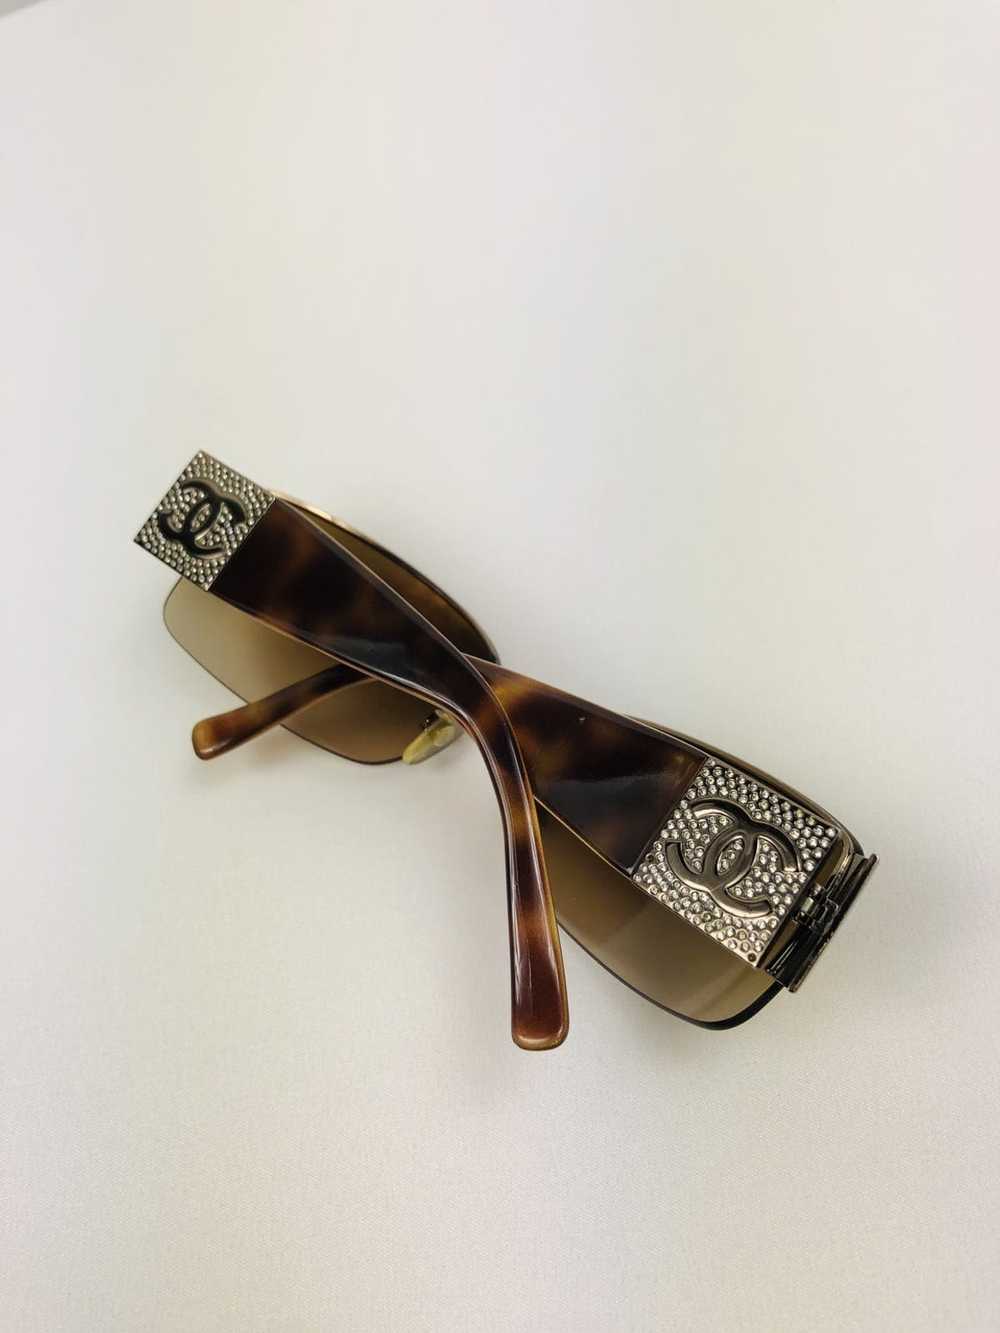 Chanel Chanel encrusted cc logo sunglasses - image 2